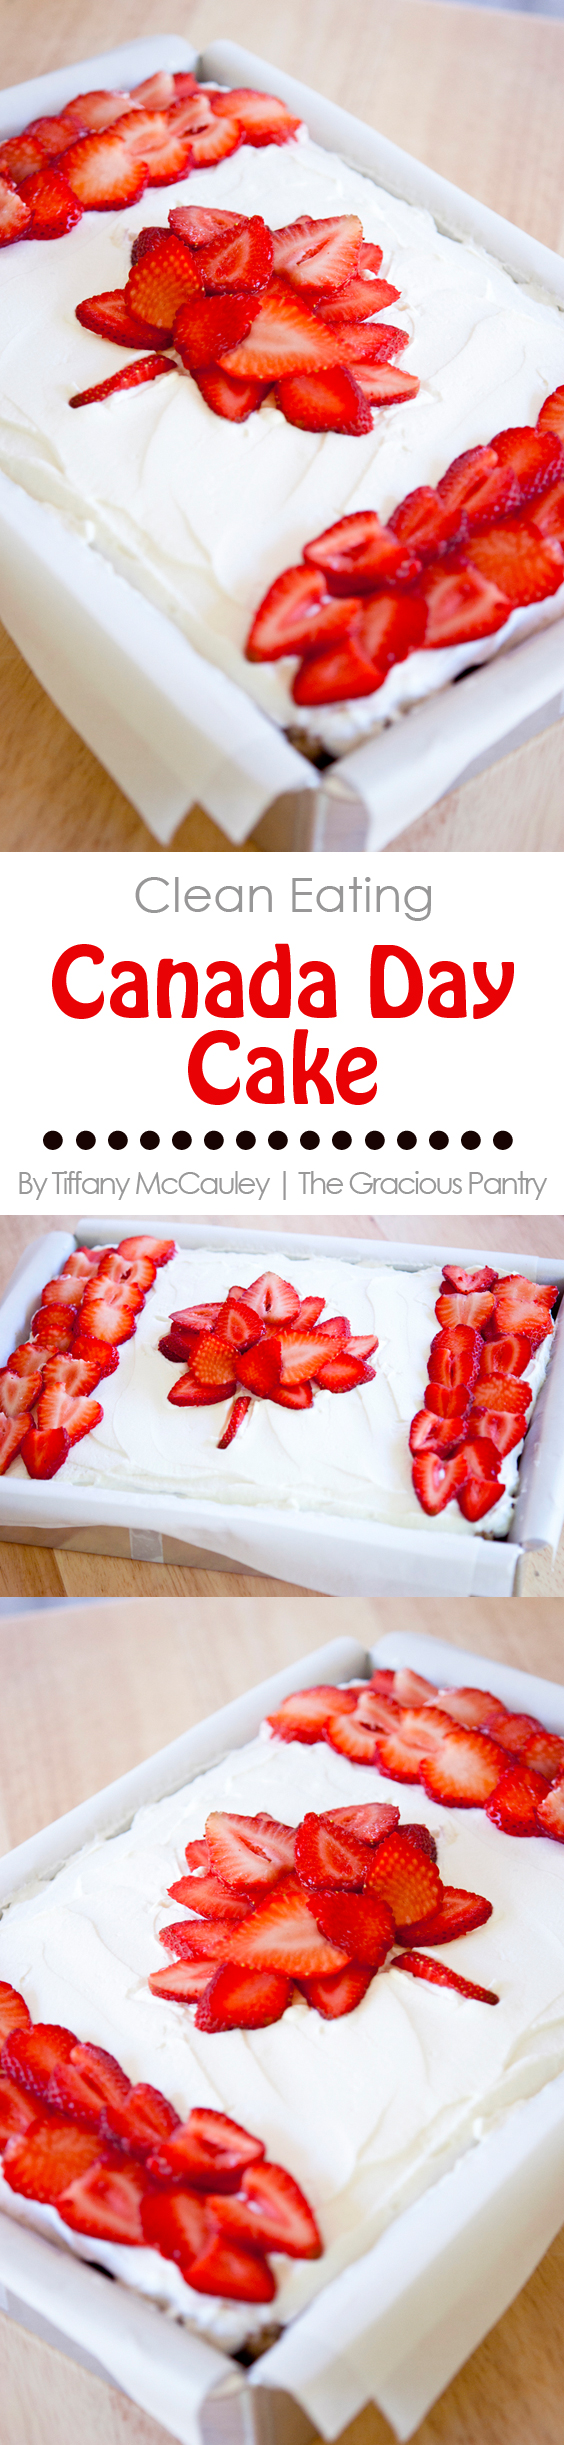 Canada Day Cake Recipe Recipes The Gracious Pantry 1051